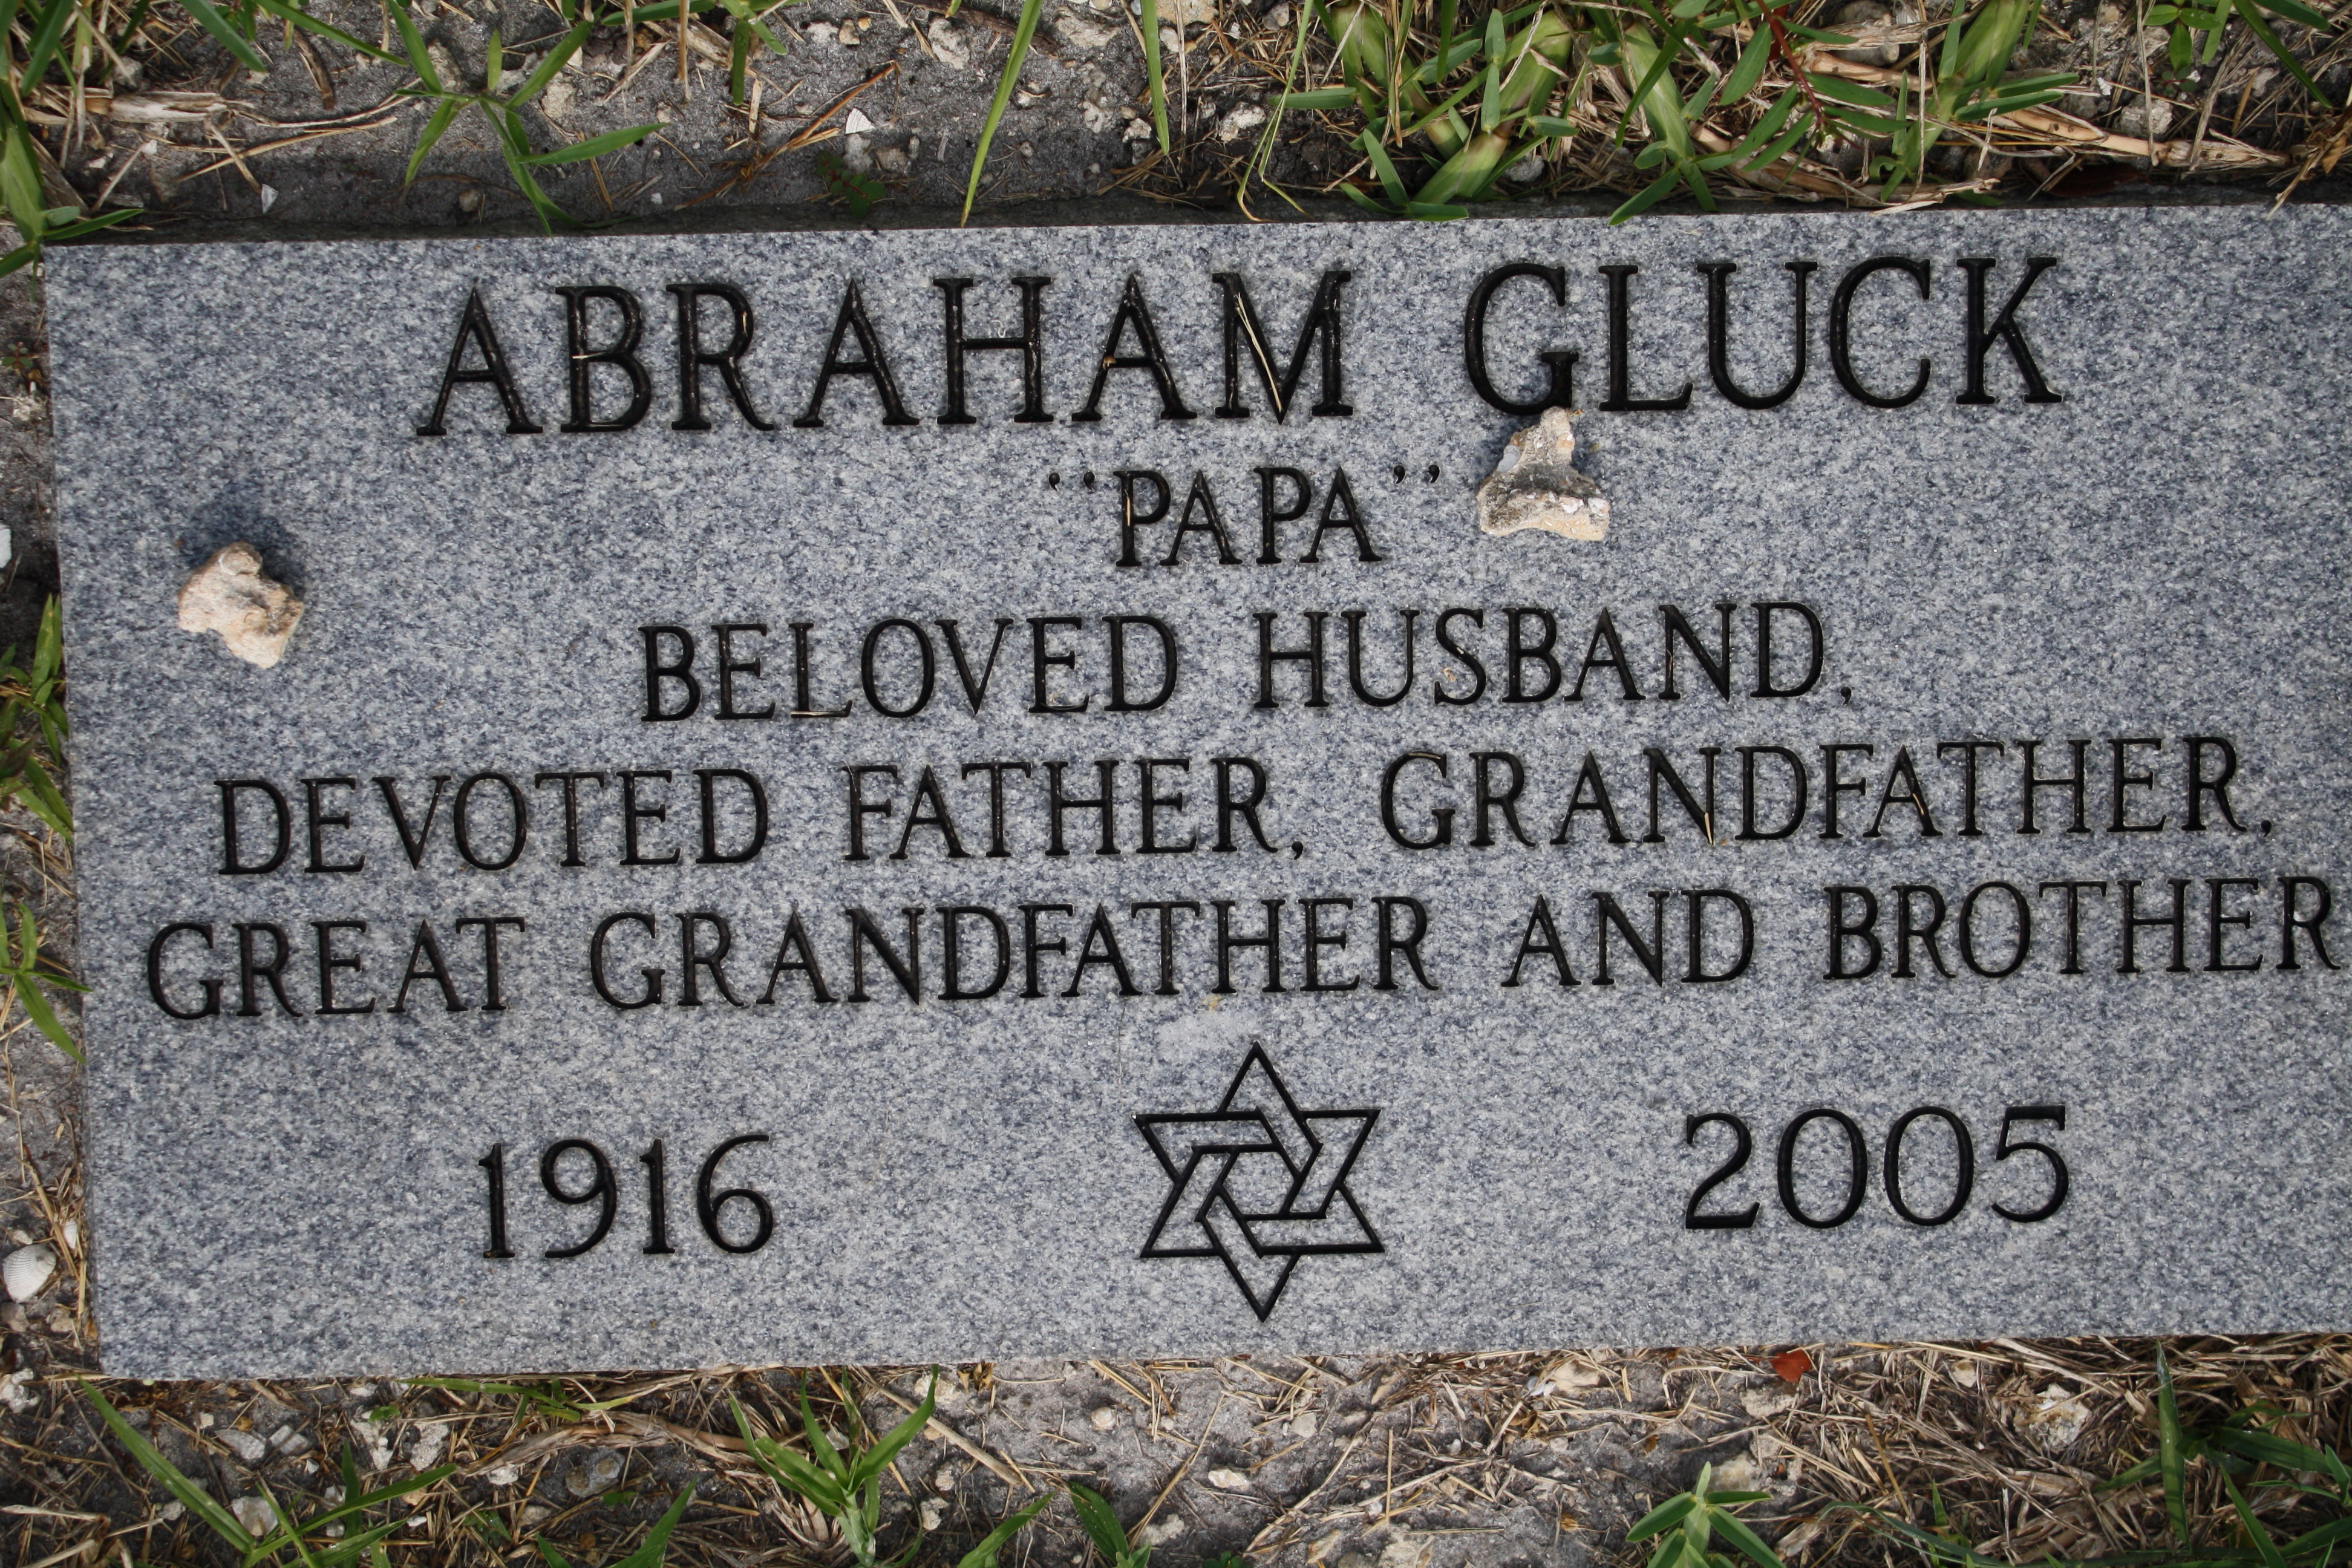 Abraham "Papa" Gluck